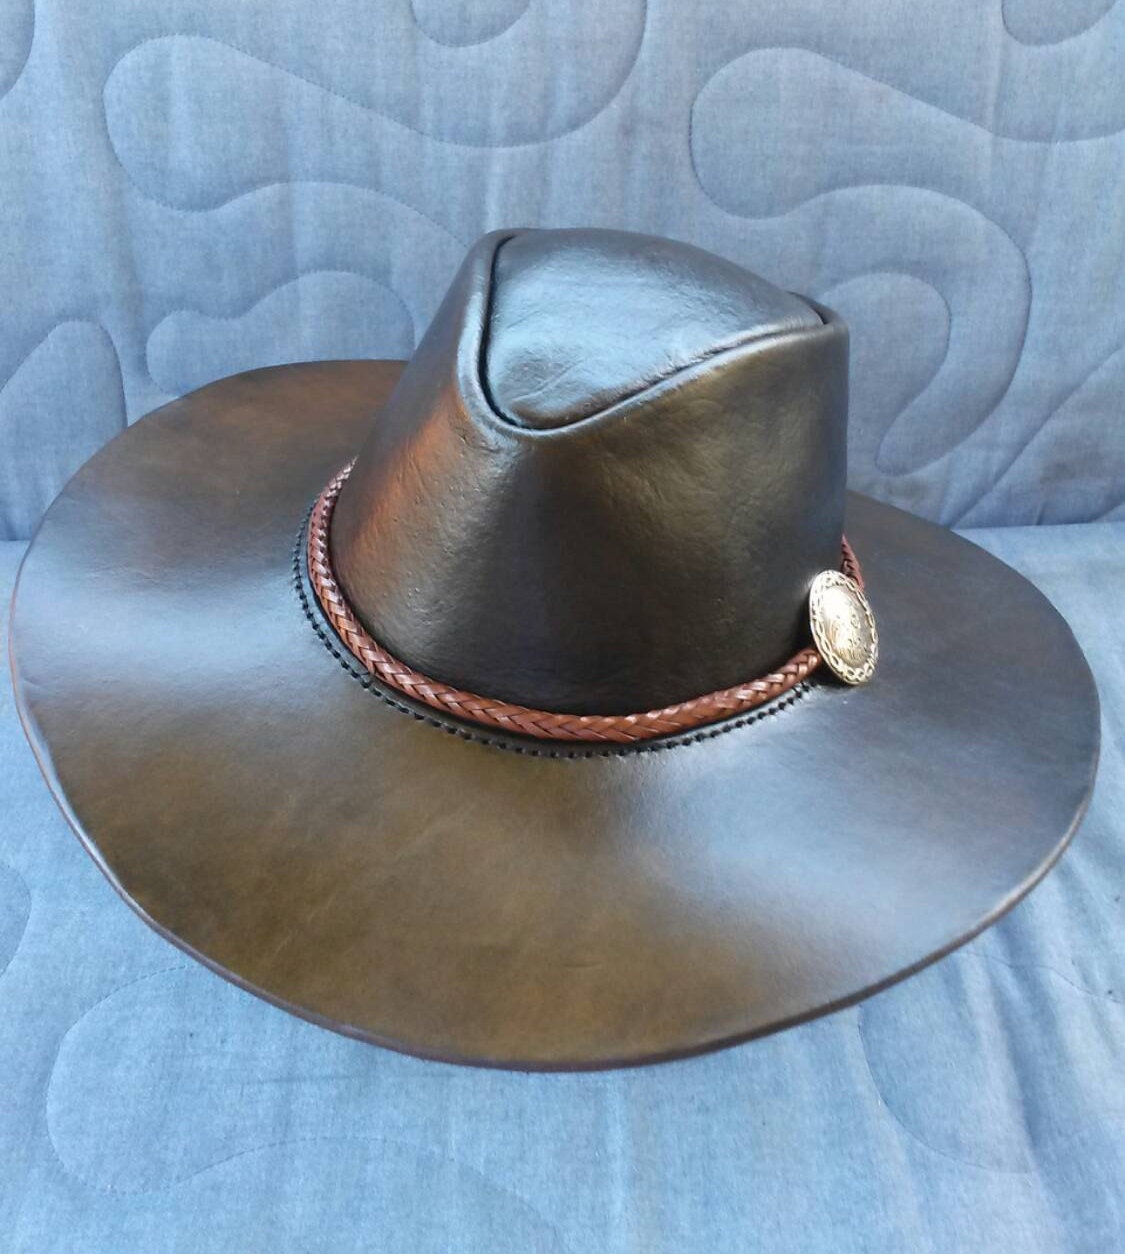 leather bushman hat